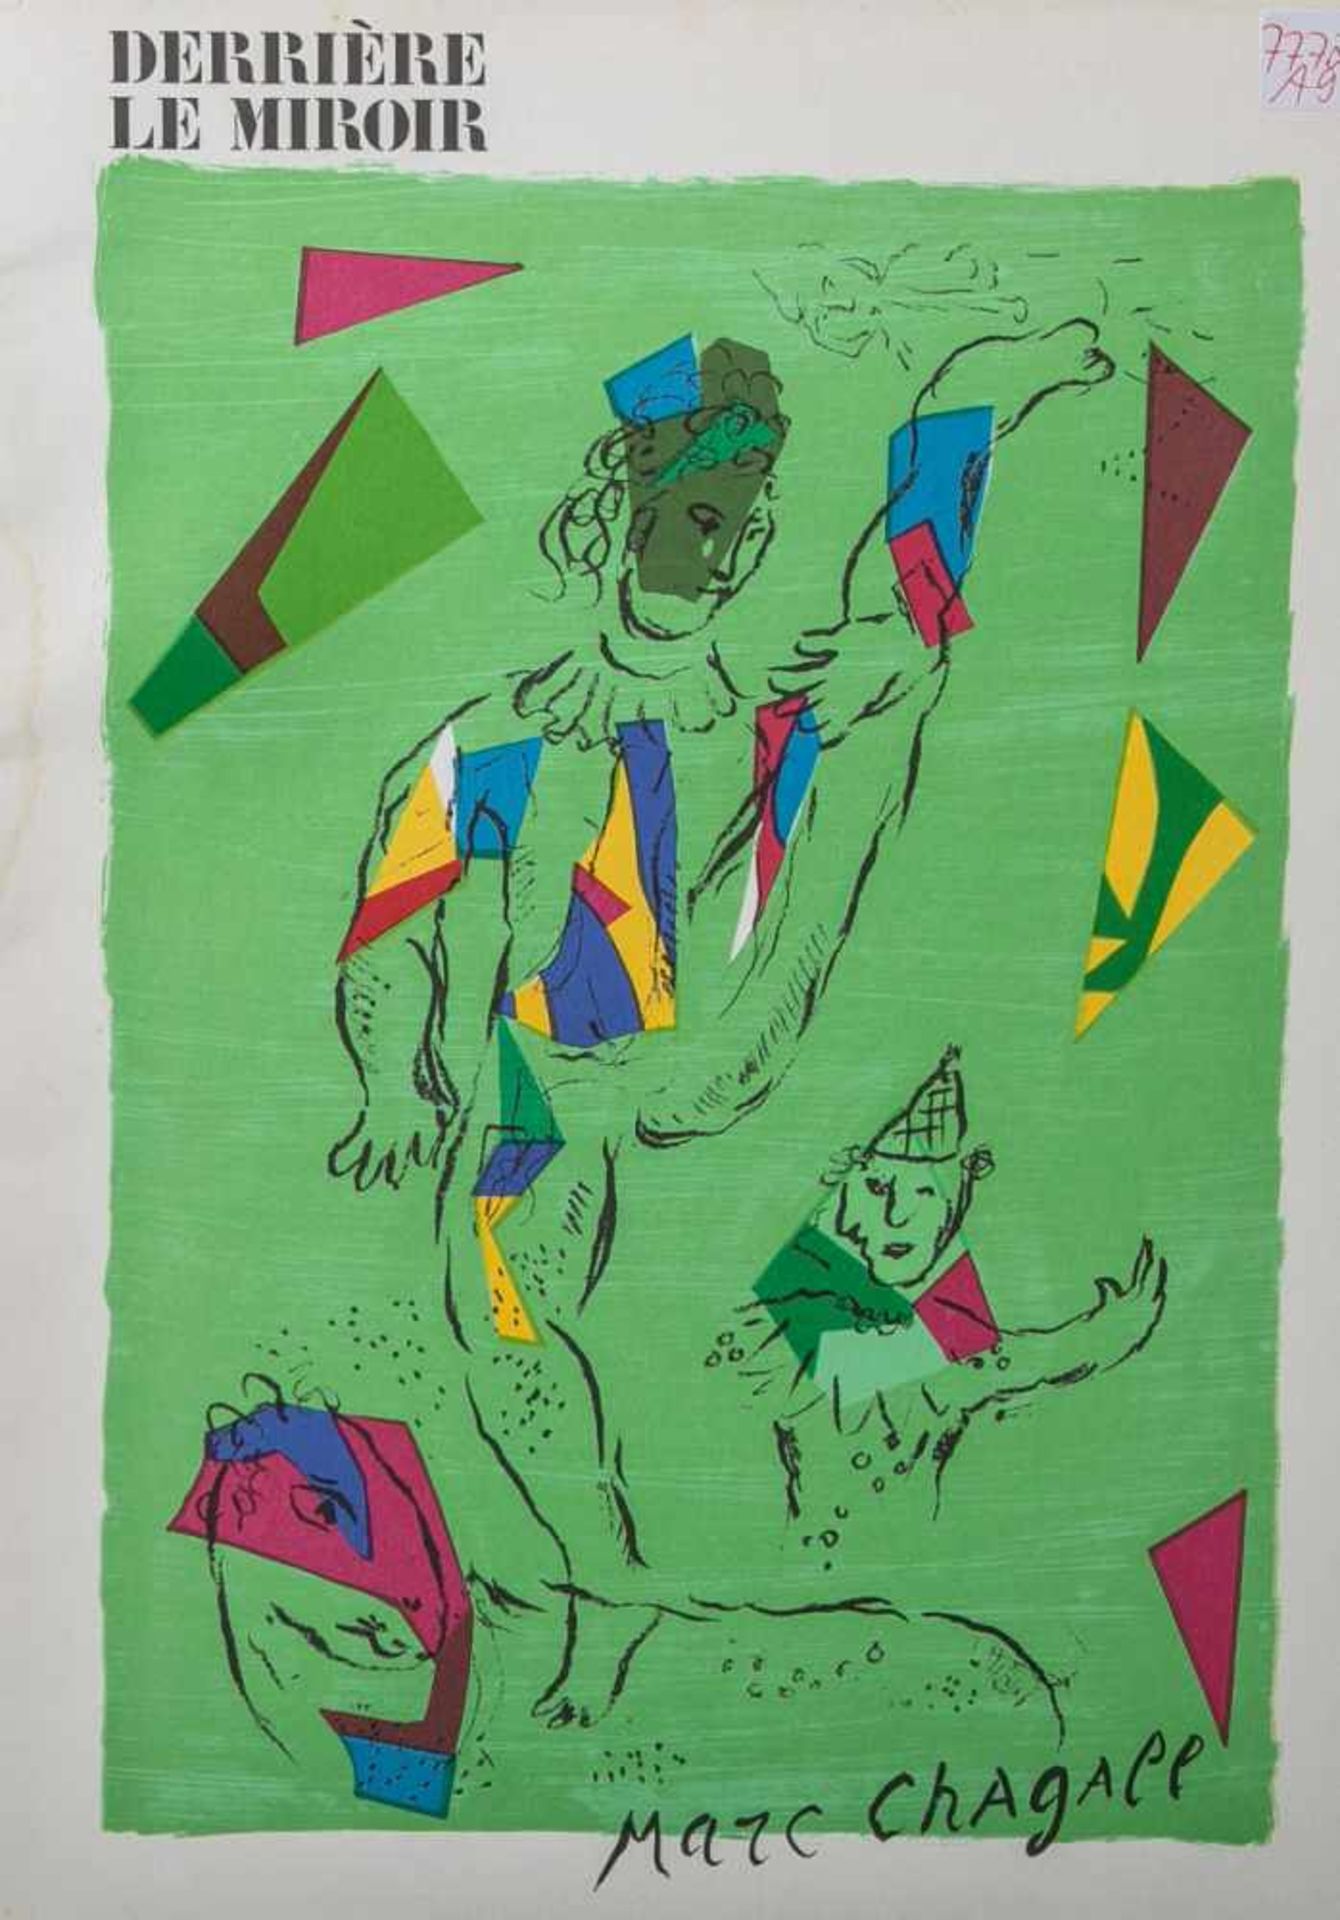 Marc Chagall-Mappe, "Derriére le miroir", Edition 1979 (Paris), Edition Maeght, Nr. 235,<